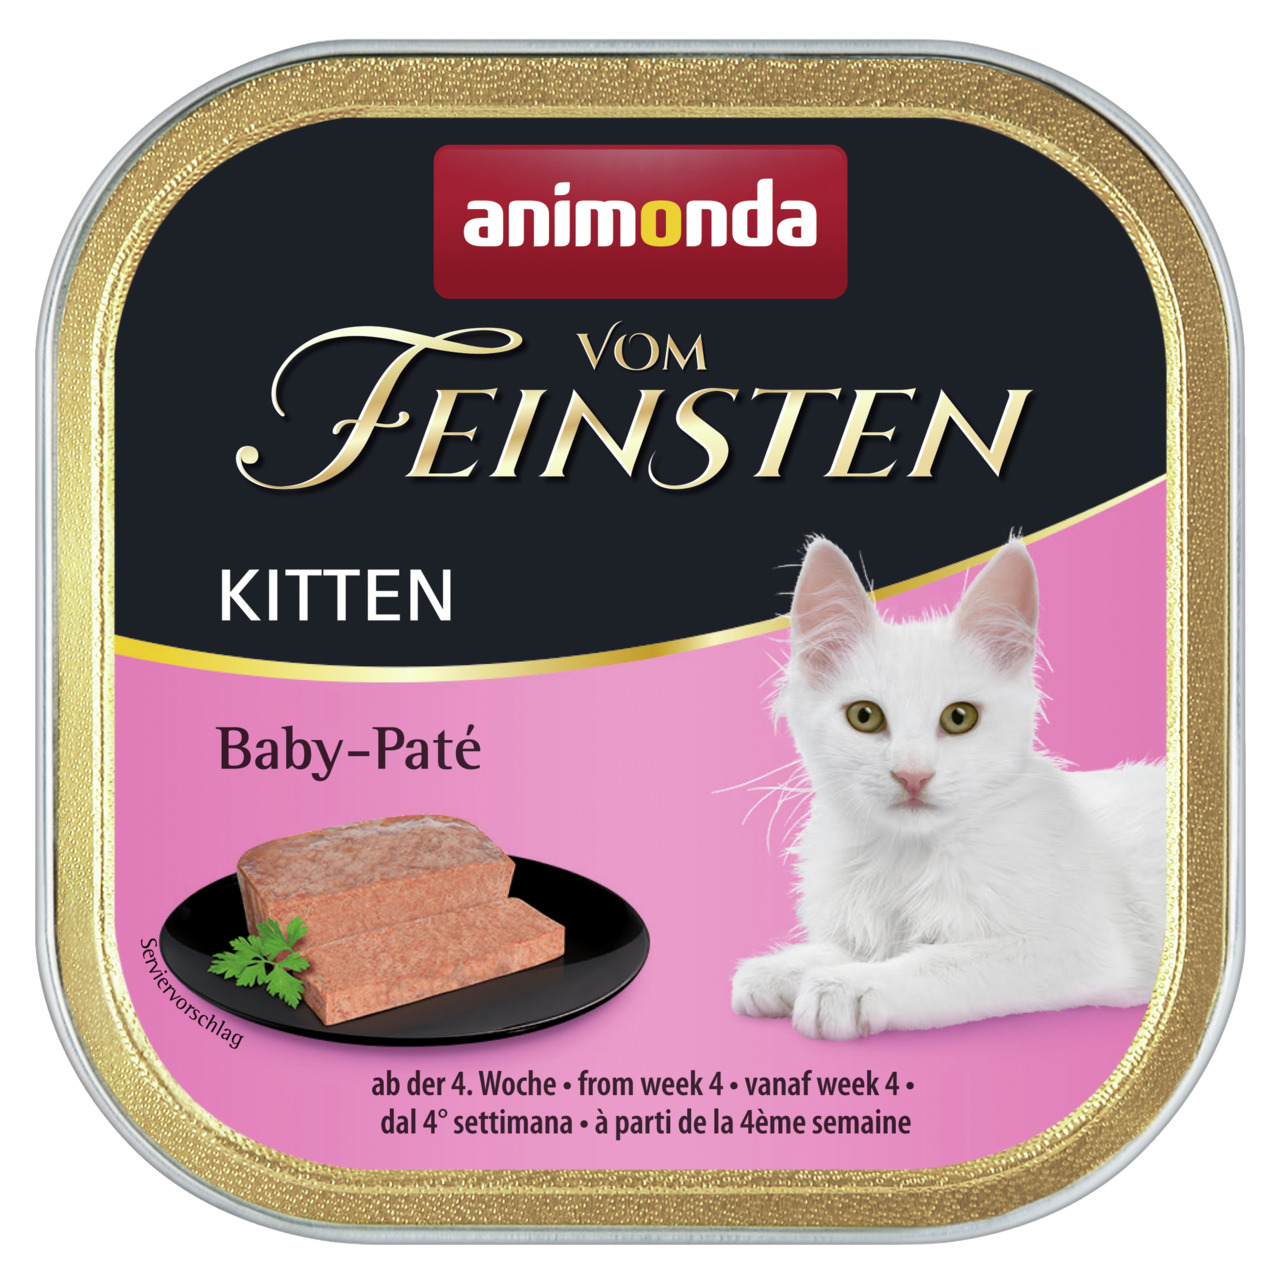 Animonda vom Feinsten Kitten Baby Paté Katzen Nassfutter 100 g